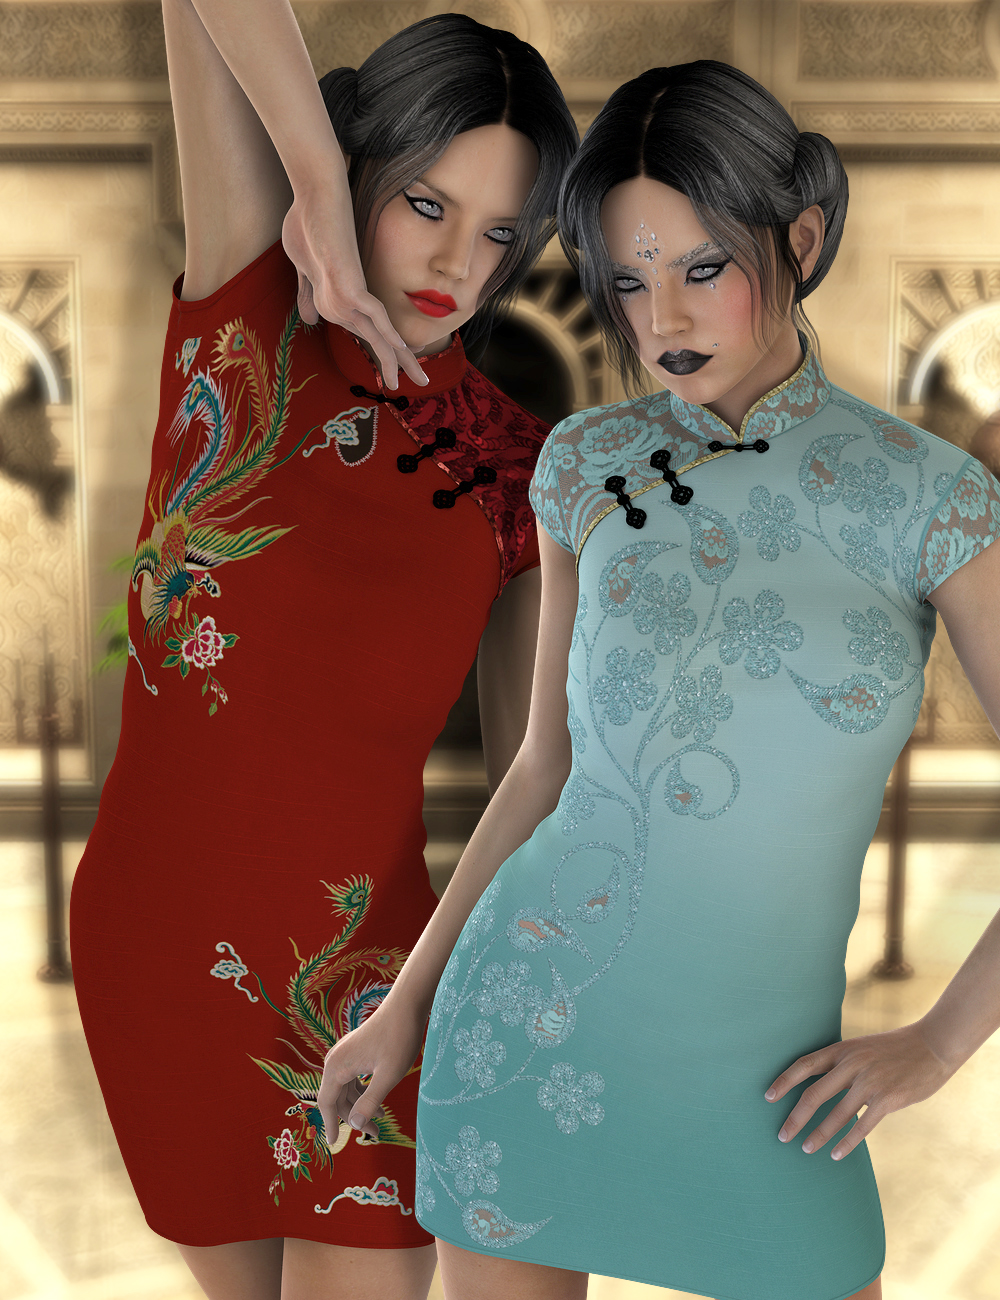 SHI for Xiao Mei's Finery by: gypsyangelchevybabe25, 3D Models by Daz 3D